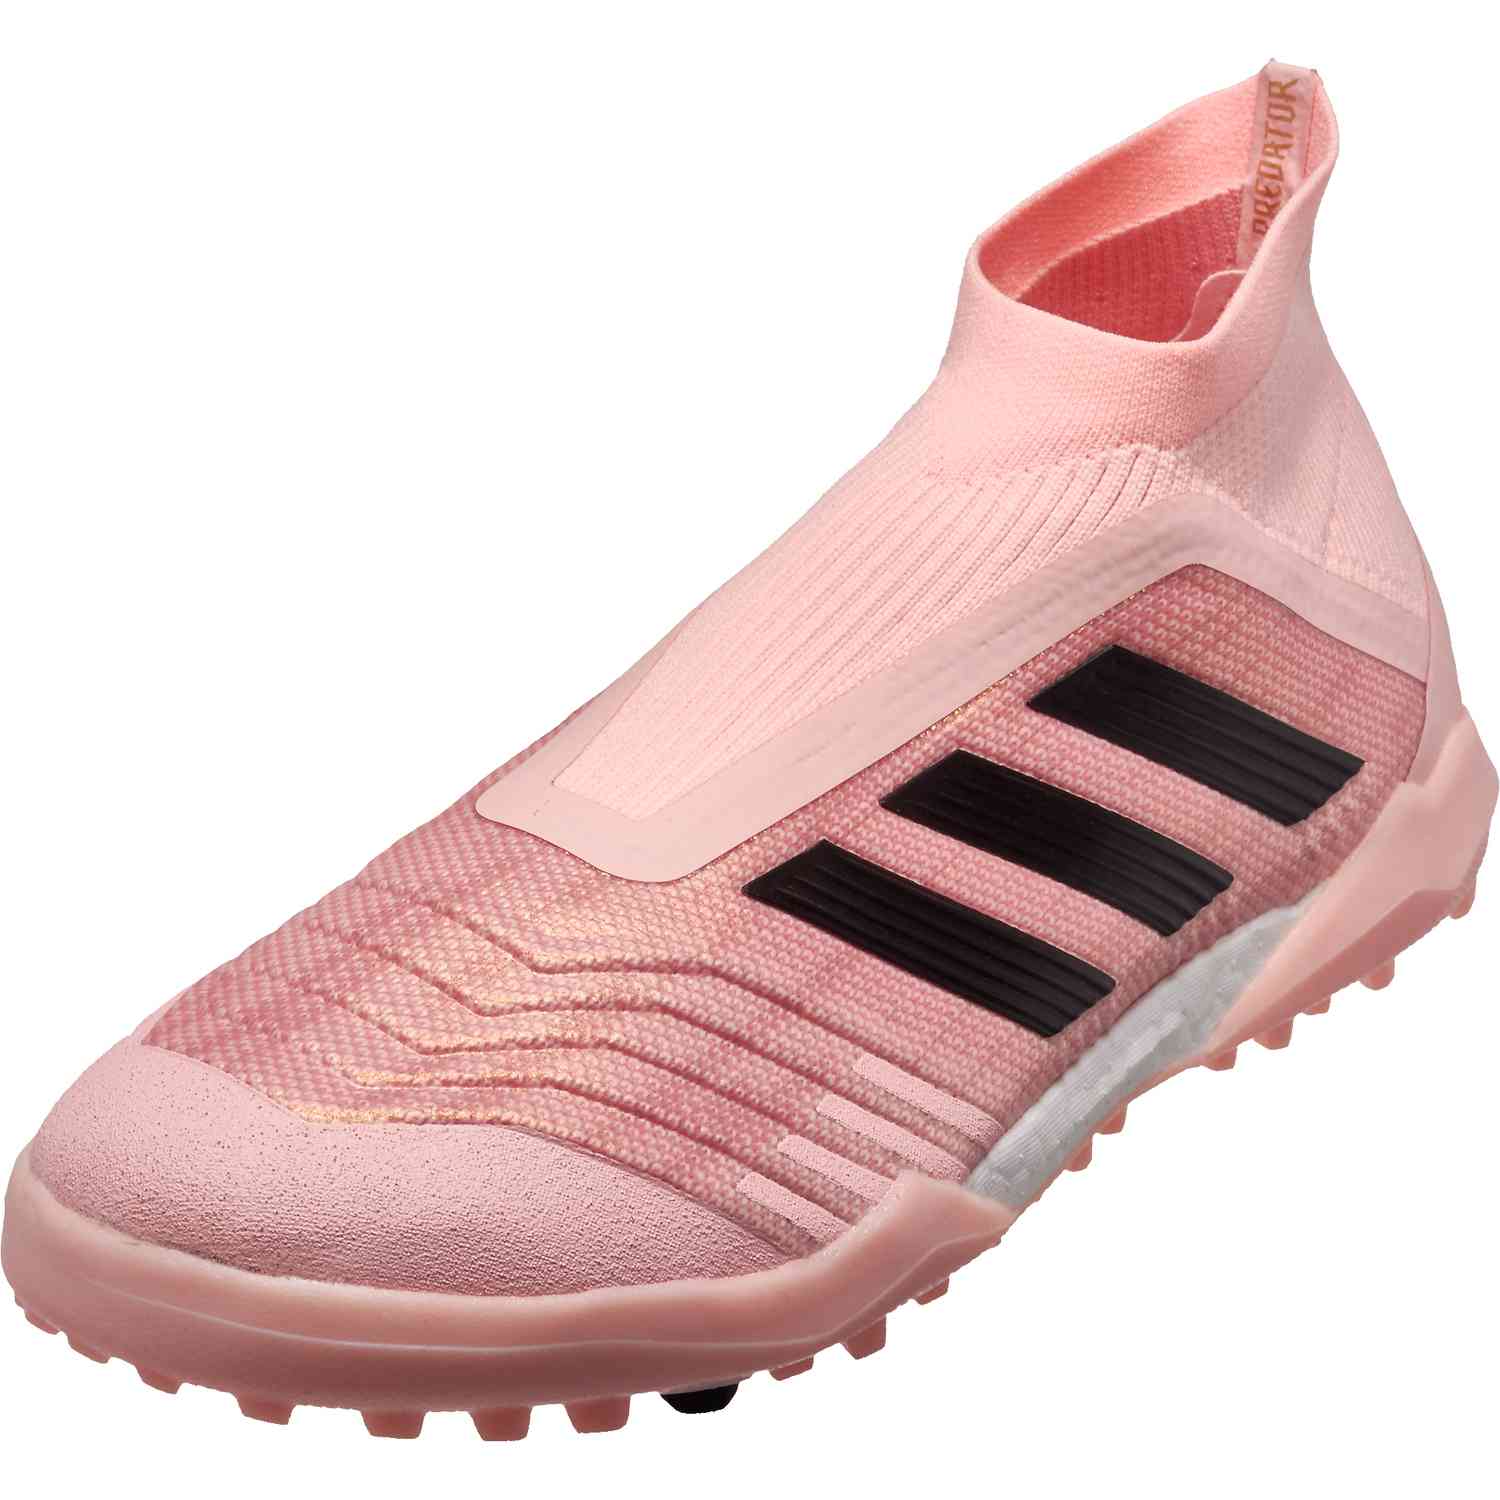 adidas football coaching shoes